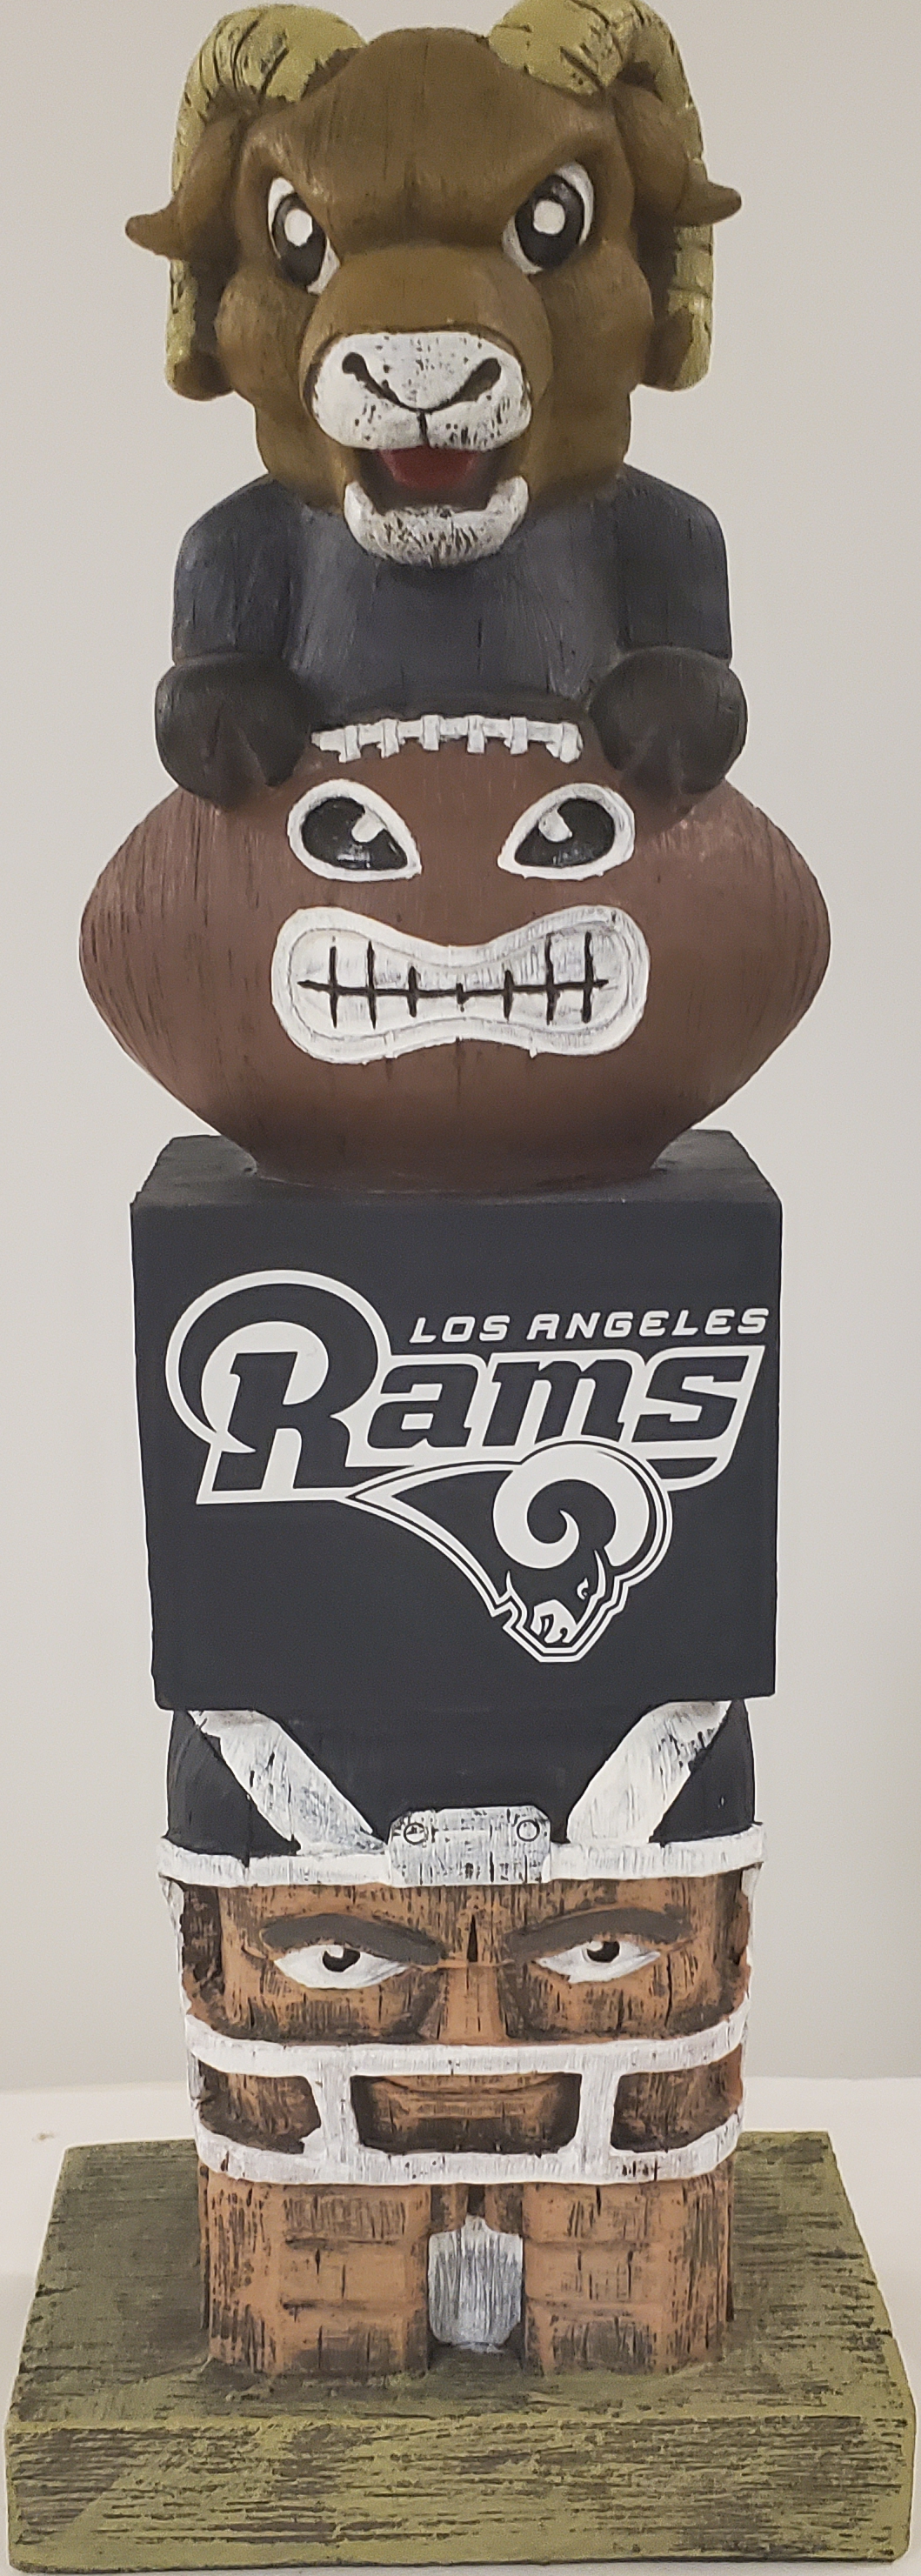 Los Angeles Rams Totem